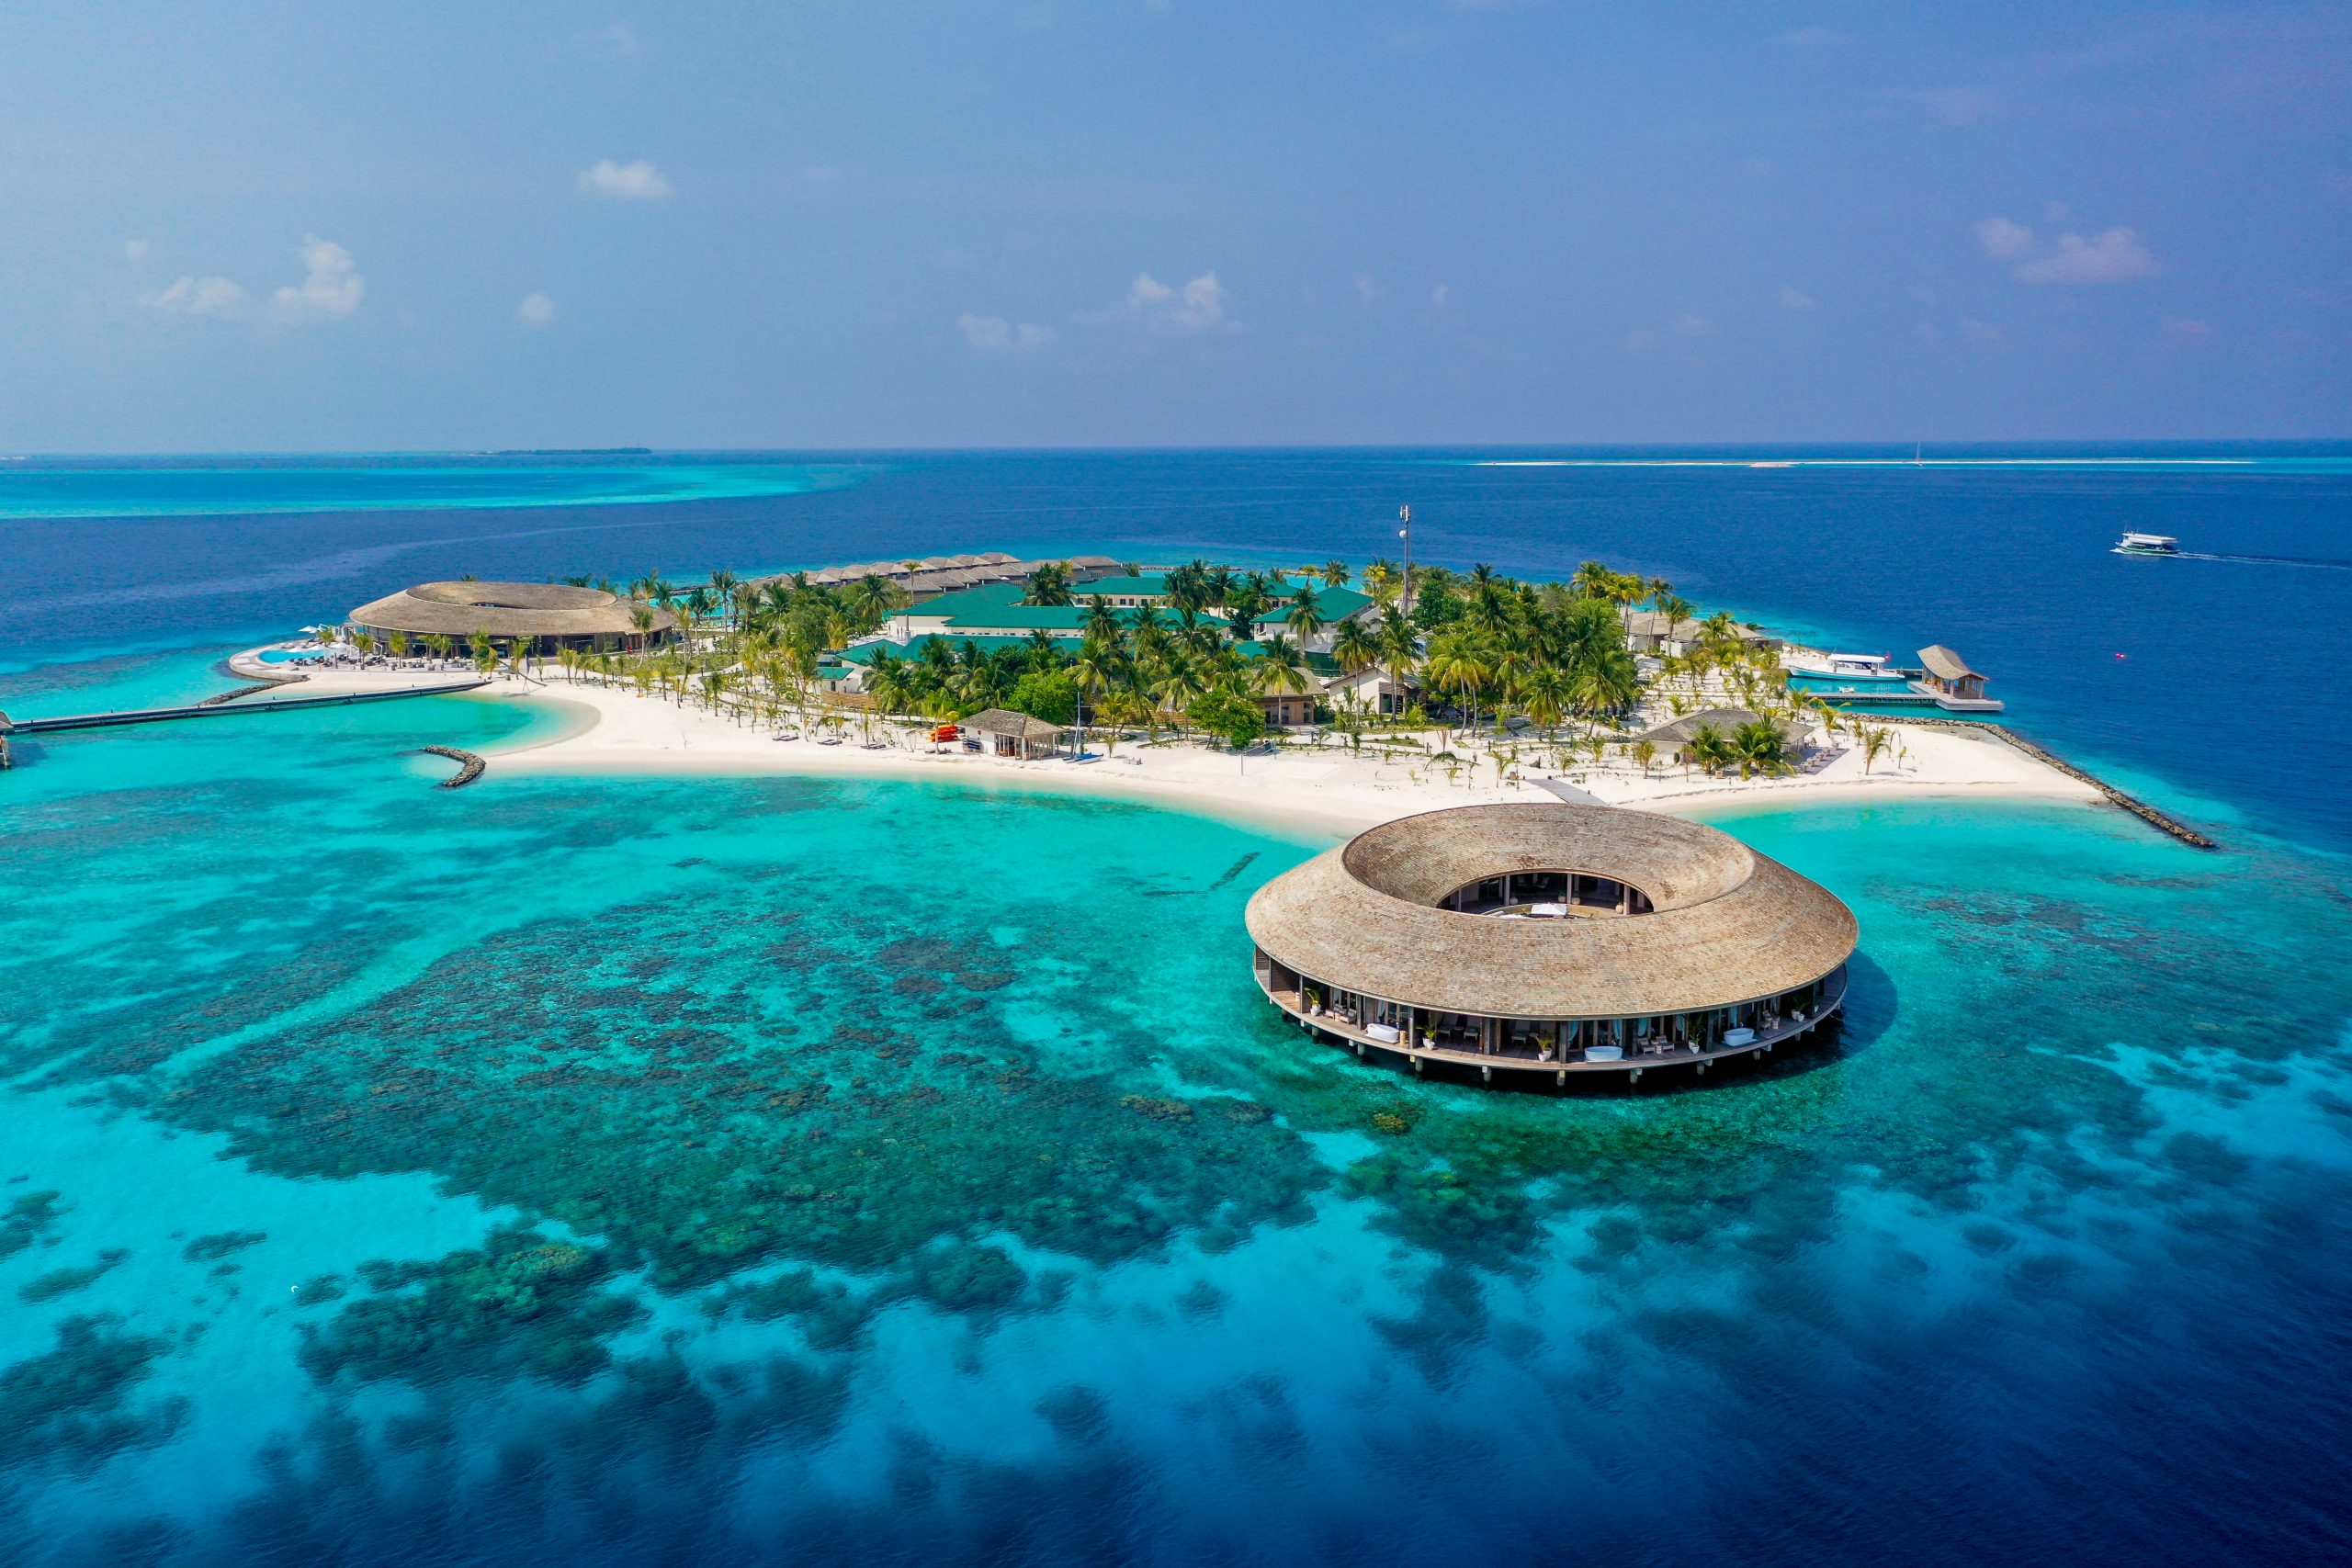 Kagi Maldives Spa Island – A Luxurious Oasis of Healthy Living and Joy ...